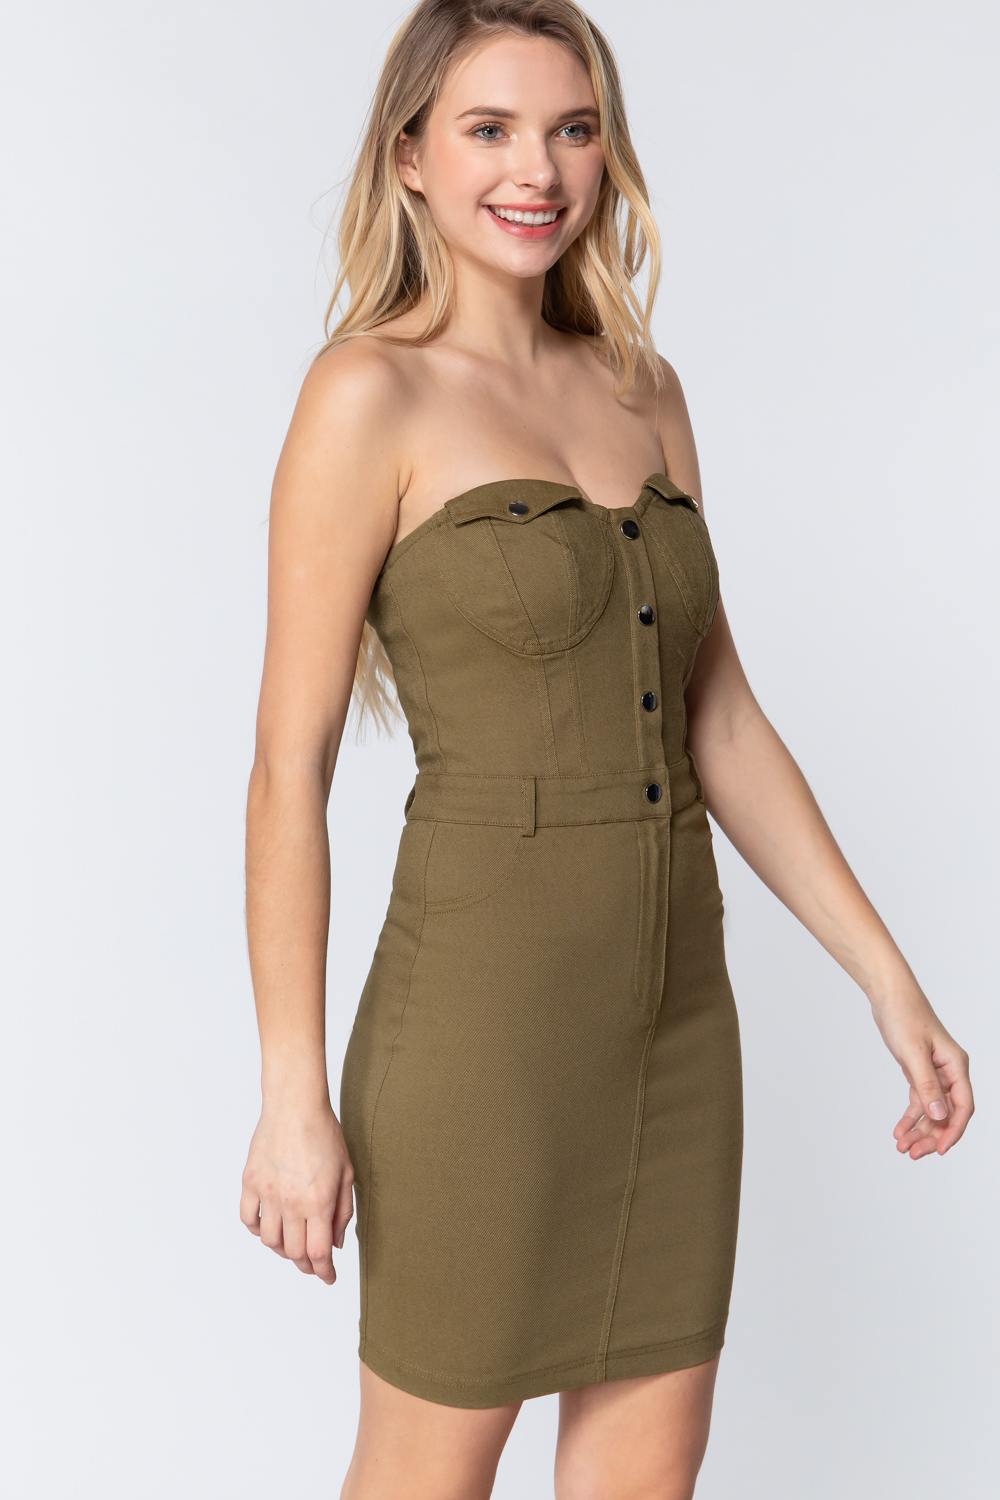 Strapless Button Down Mini Dress - Jus Fancee Boutique